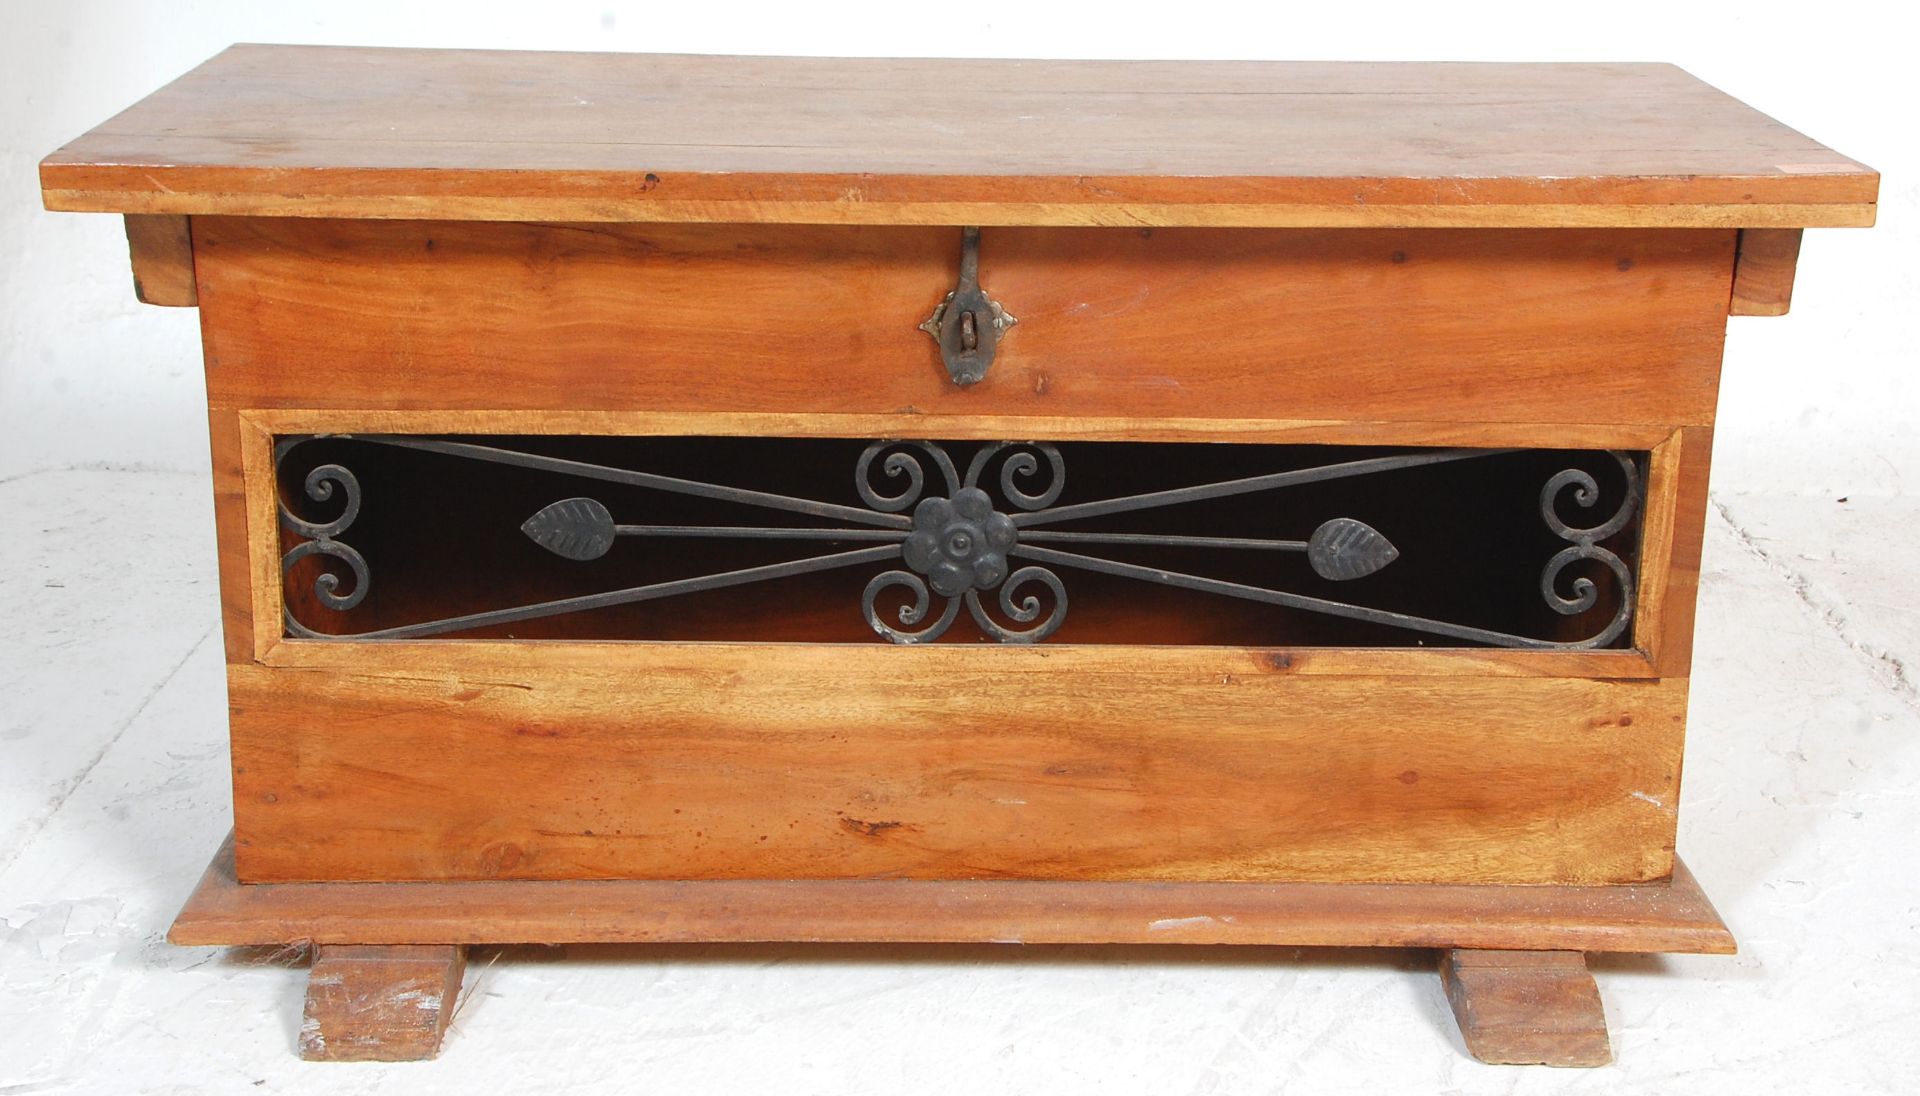 An unusual 20th century decorative hardwood Spanish Armada inspired casssone coffee table / - Image 2 of 7